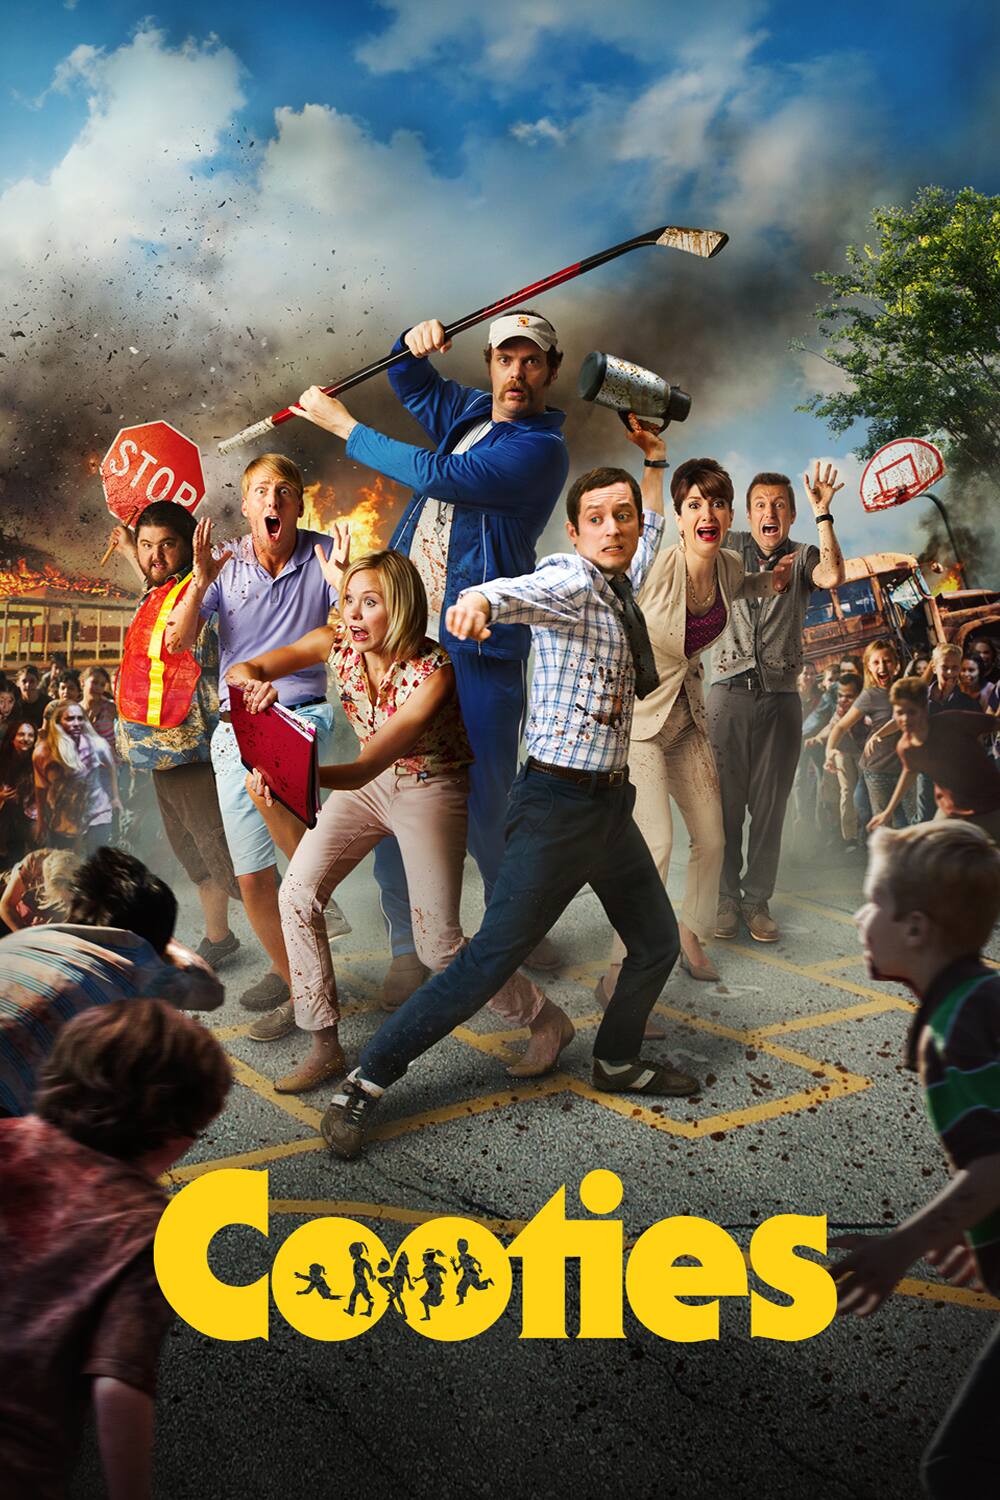 cooties 2014 full movie watch online